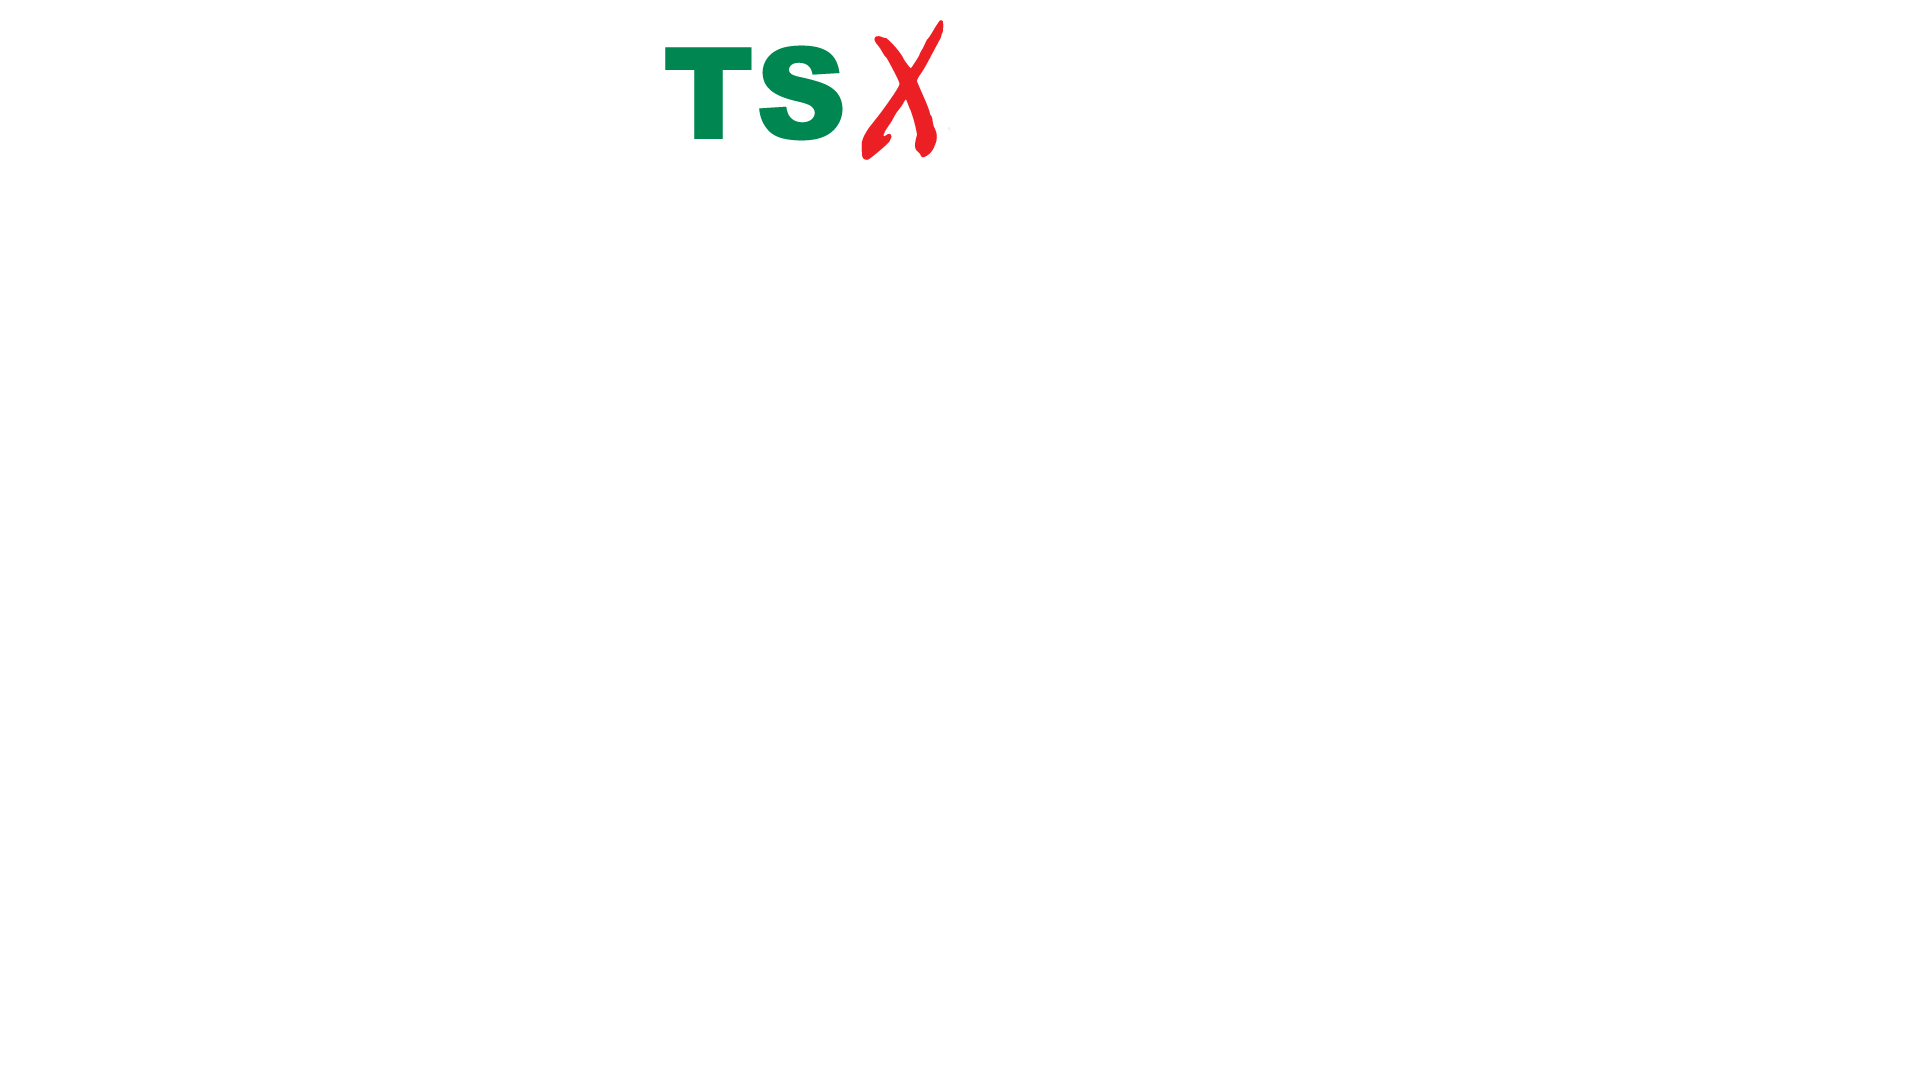 InteliJet TSX harsh environment thermal inkjet printer